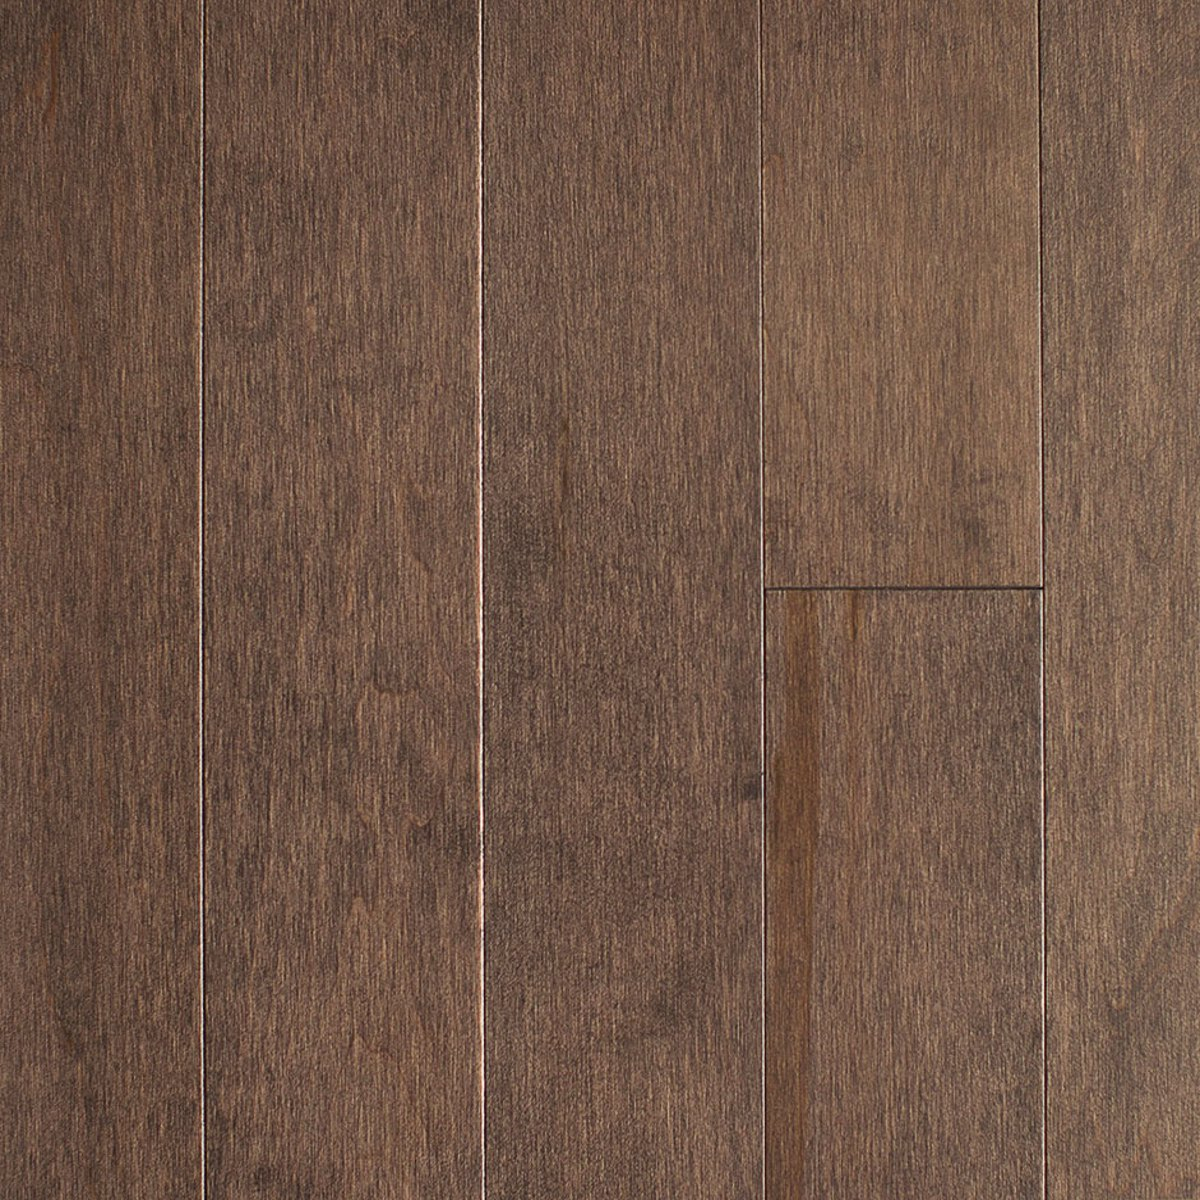 Semi Gloss Hard Maple Hardwood Flooring, Hard Maple Hardwood Flooring